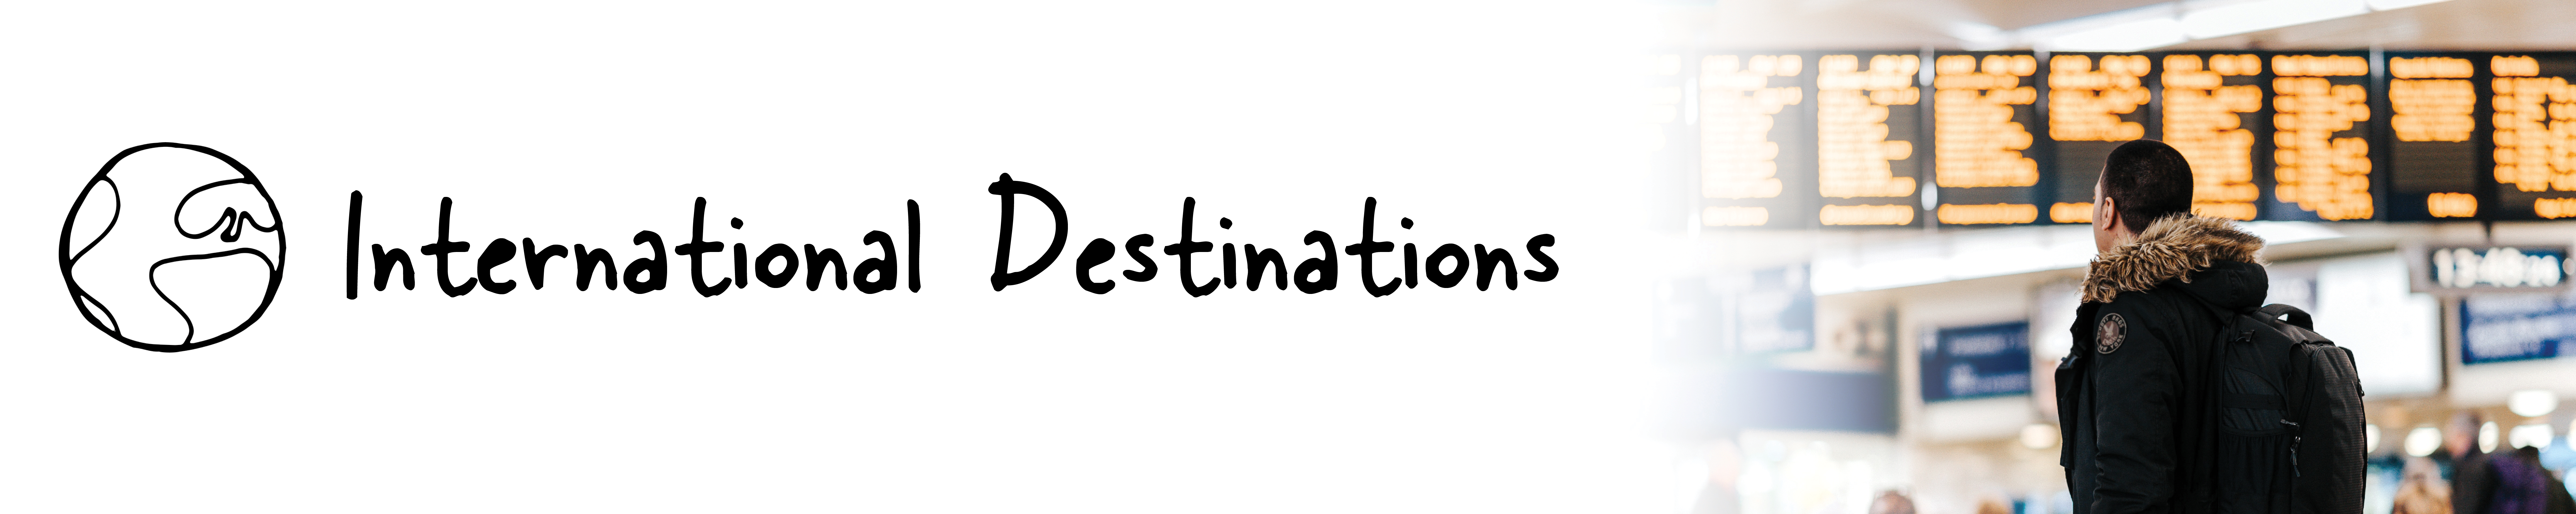 International Destinations